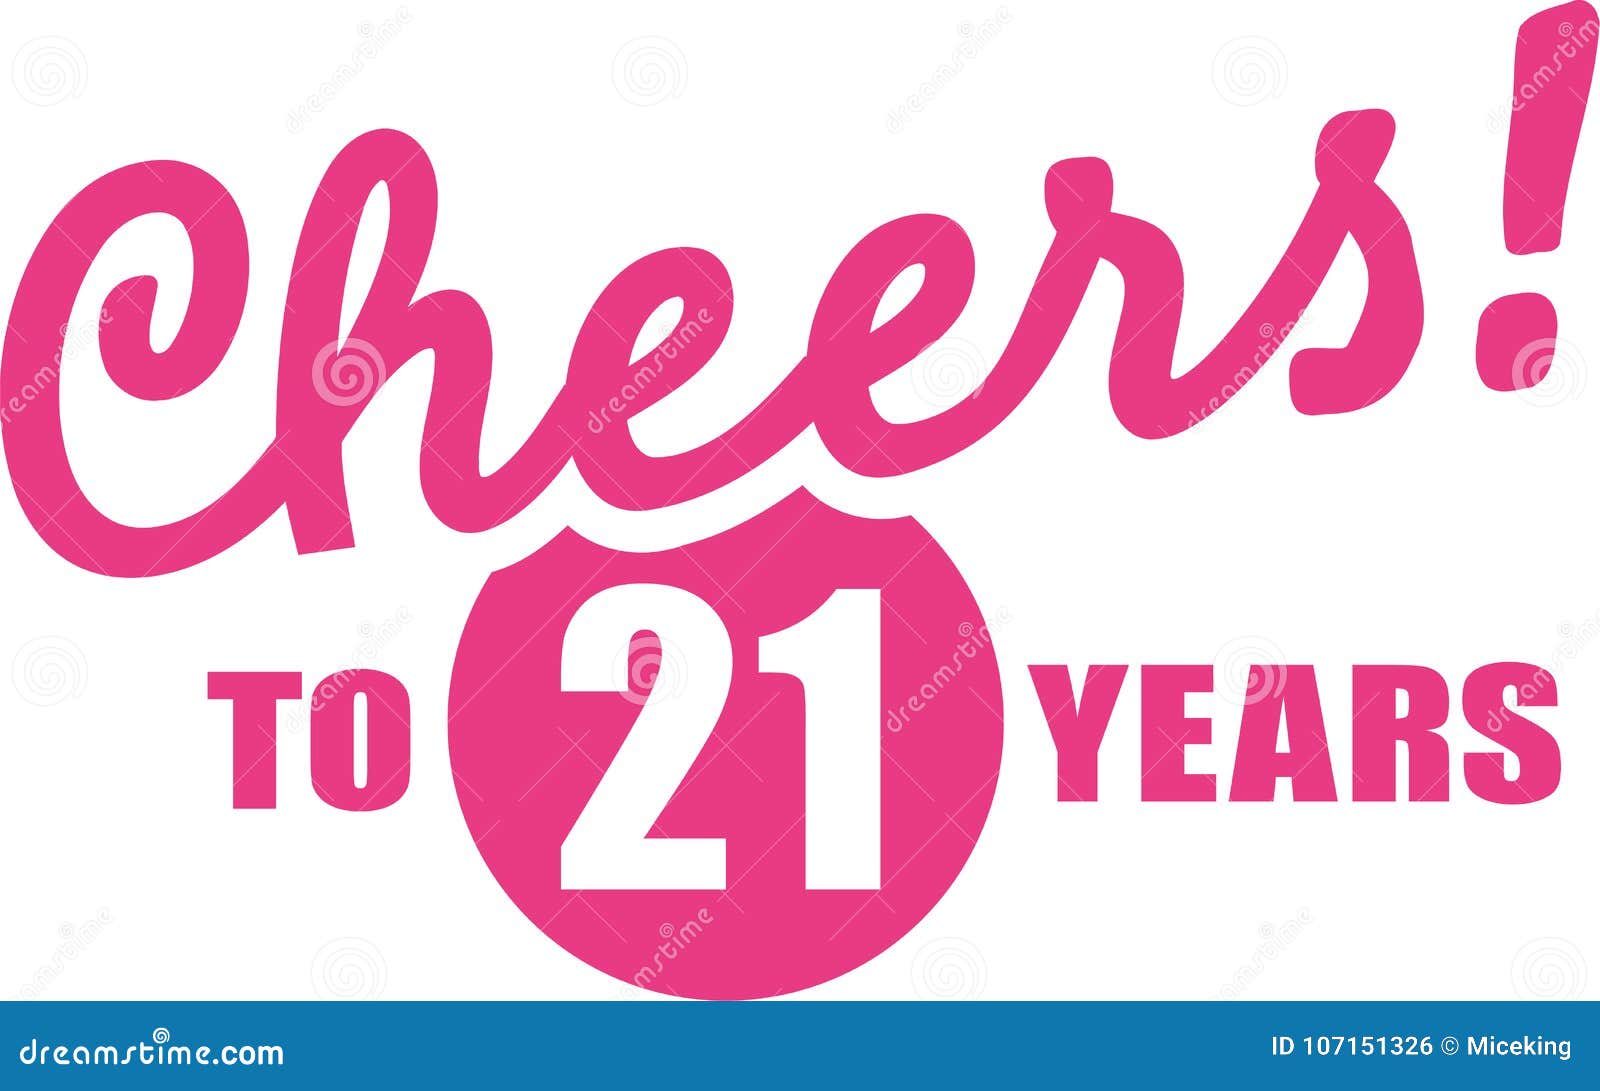 Uitgelezene Cheers To 21 Years - 21st Birthday Stock Illustration WX-12